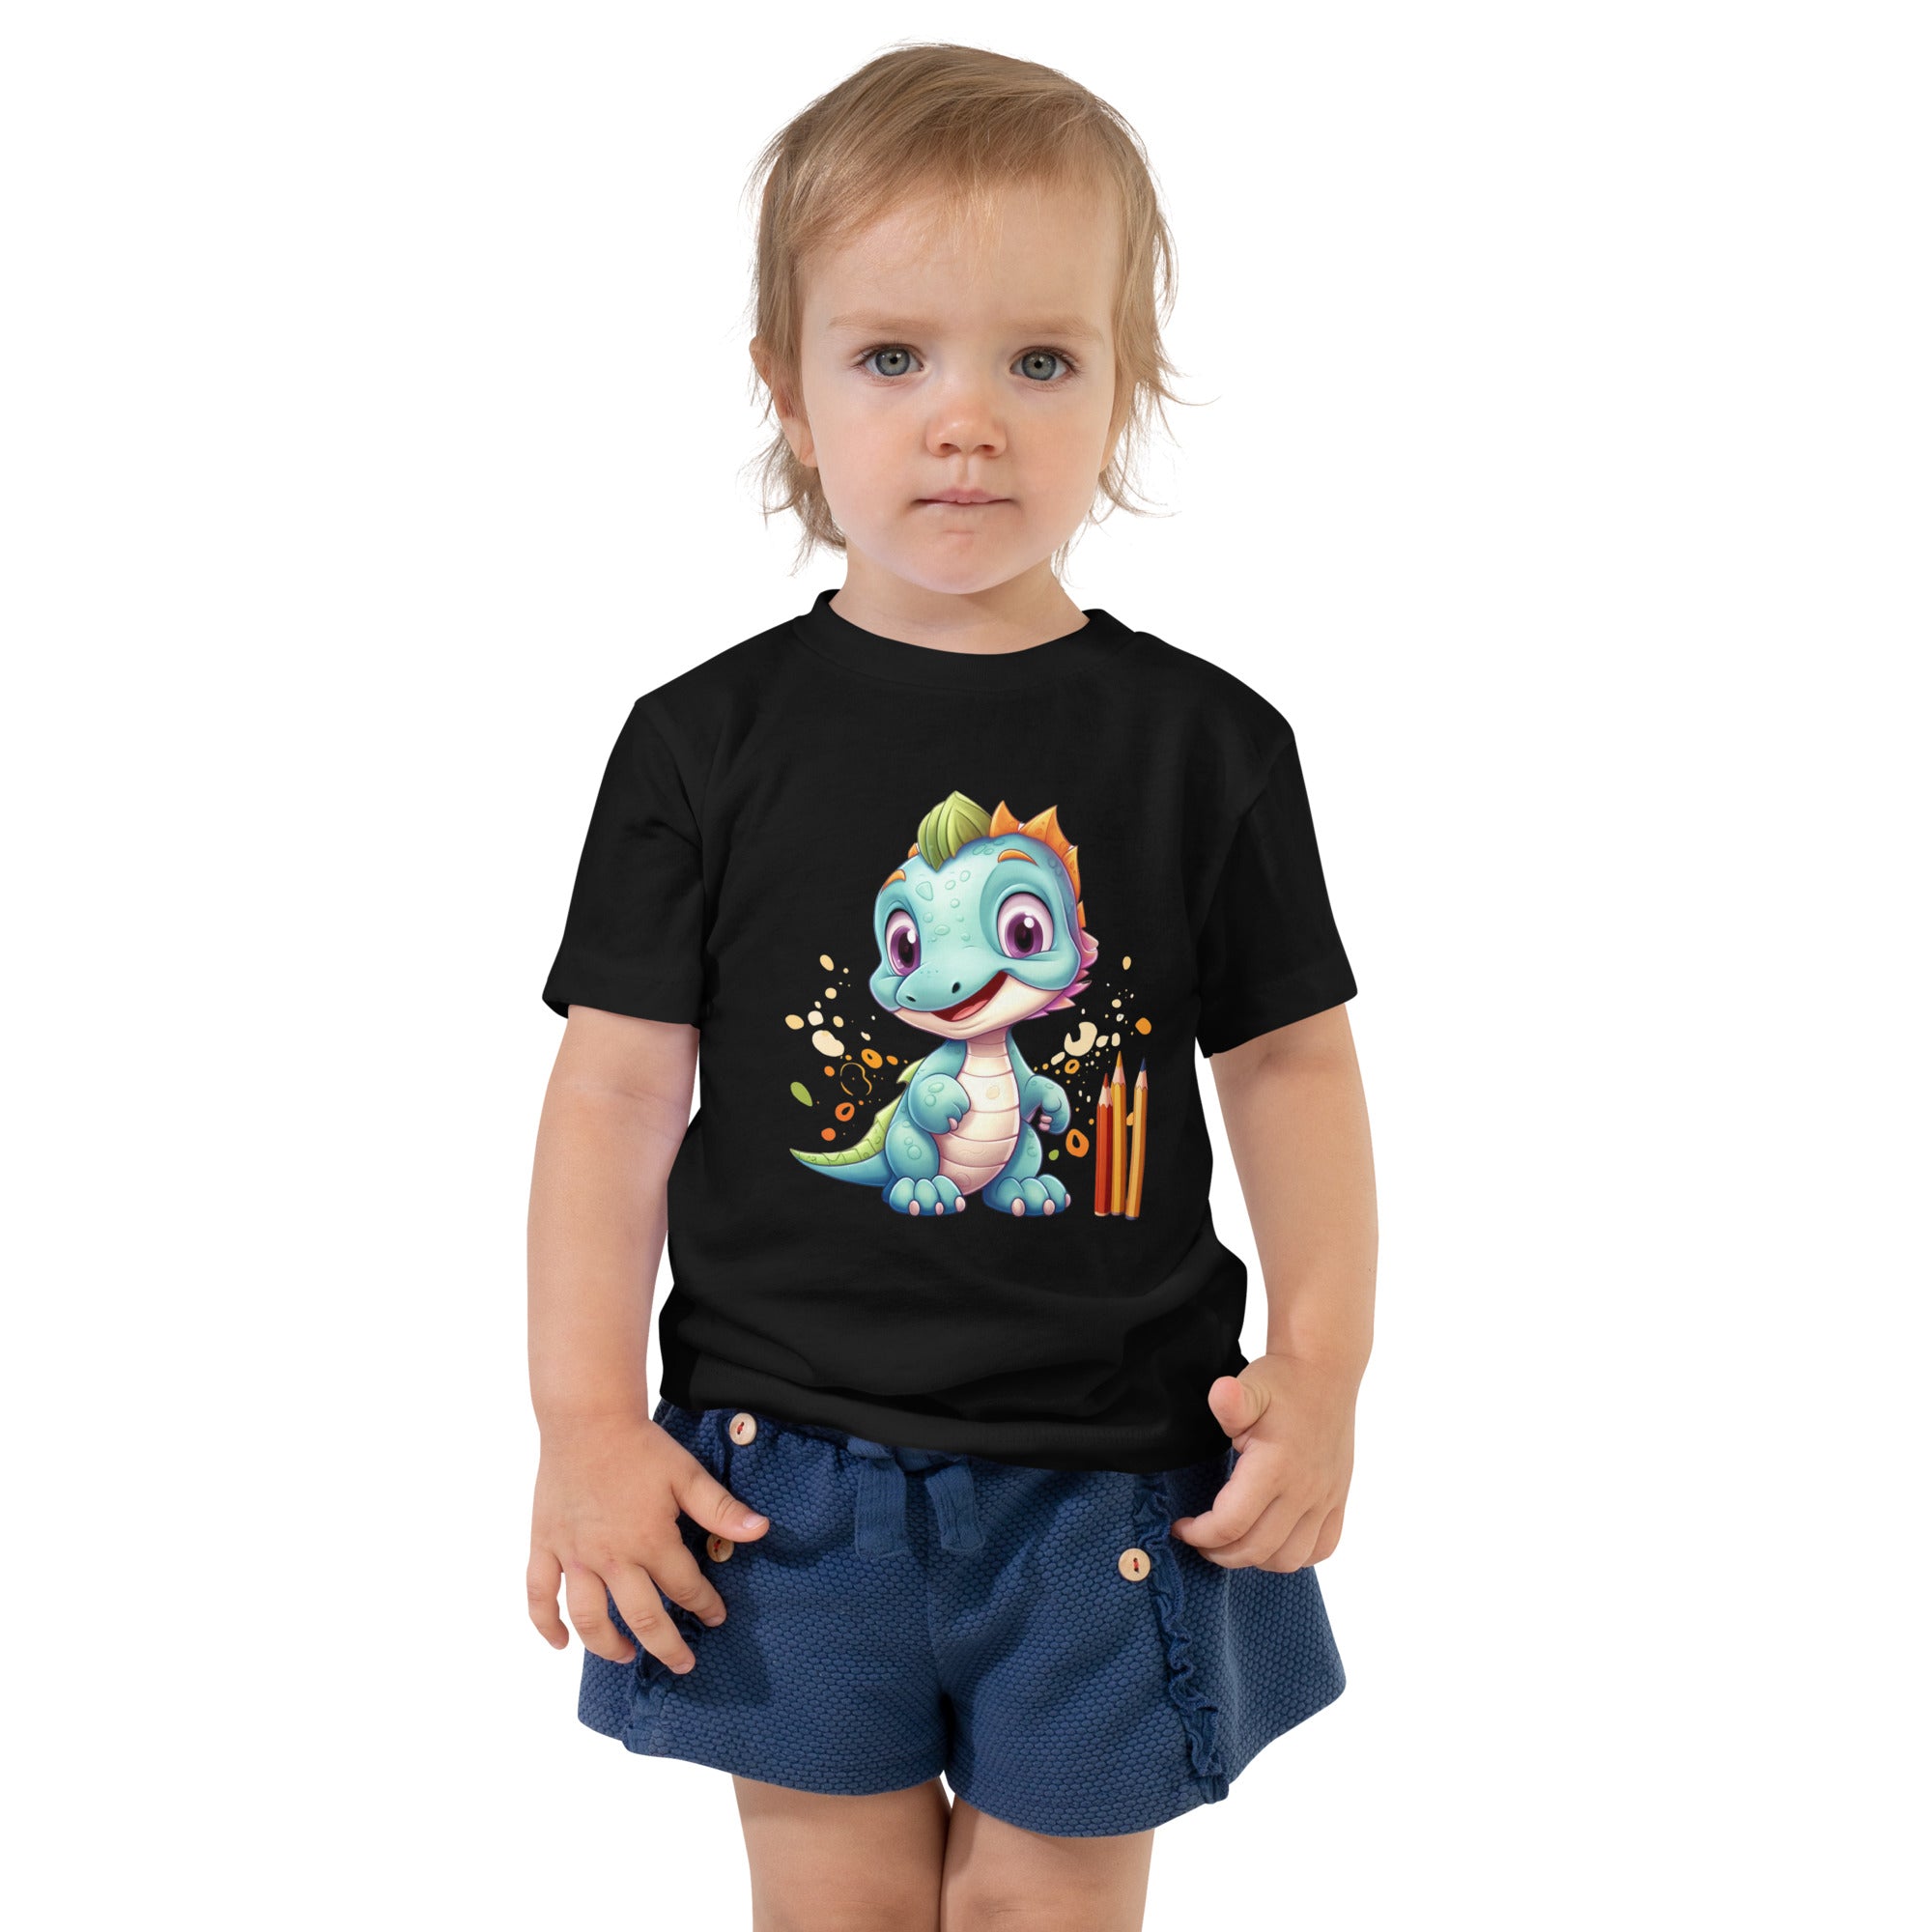 Toddler Short Sleeve Tee- Cute Dinosaur